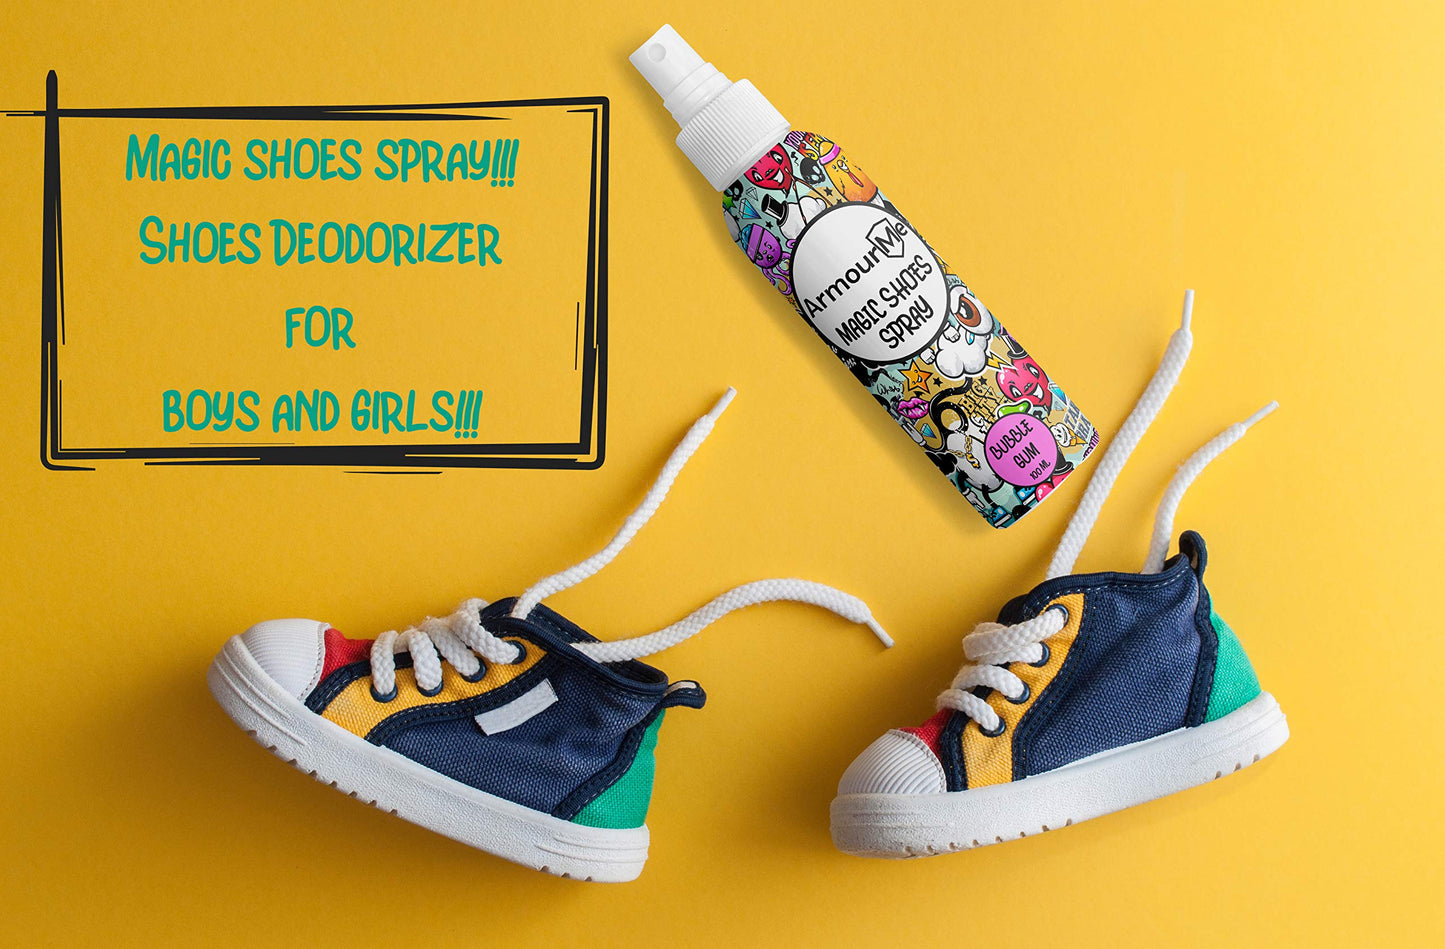 ArmourMe Shoe Spray | Bubble Gum | Shoe Deodorizer | Shoe Spray Smell Eliminator for Shoes and Sandal | Men & Women Extra Strength Shoe Odor Eliminator | Socks Deodorize.